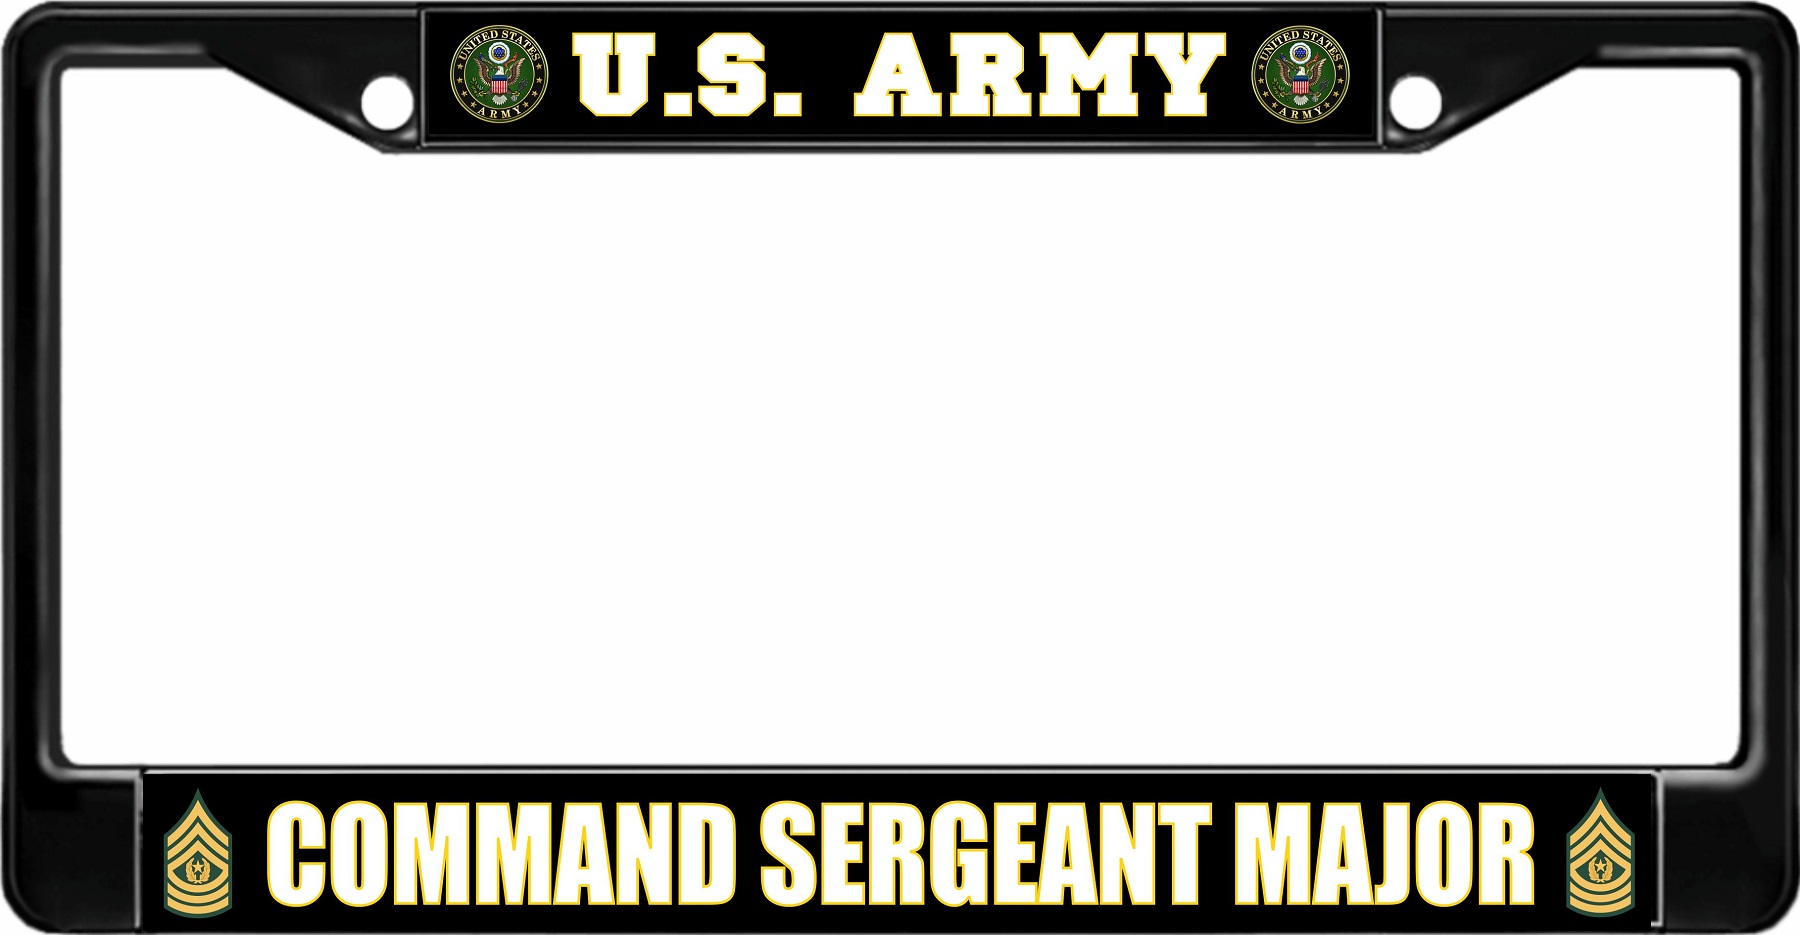 U.S. Army Command Sergeant Major Black LICENSE PLATE Frame